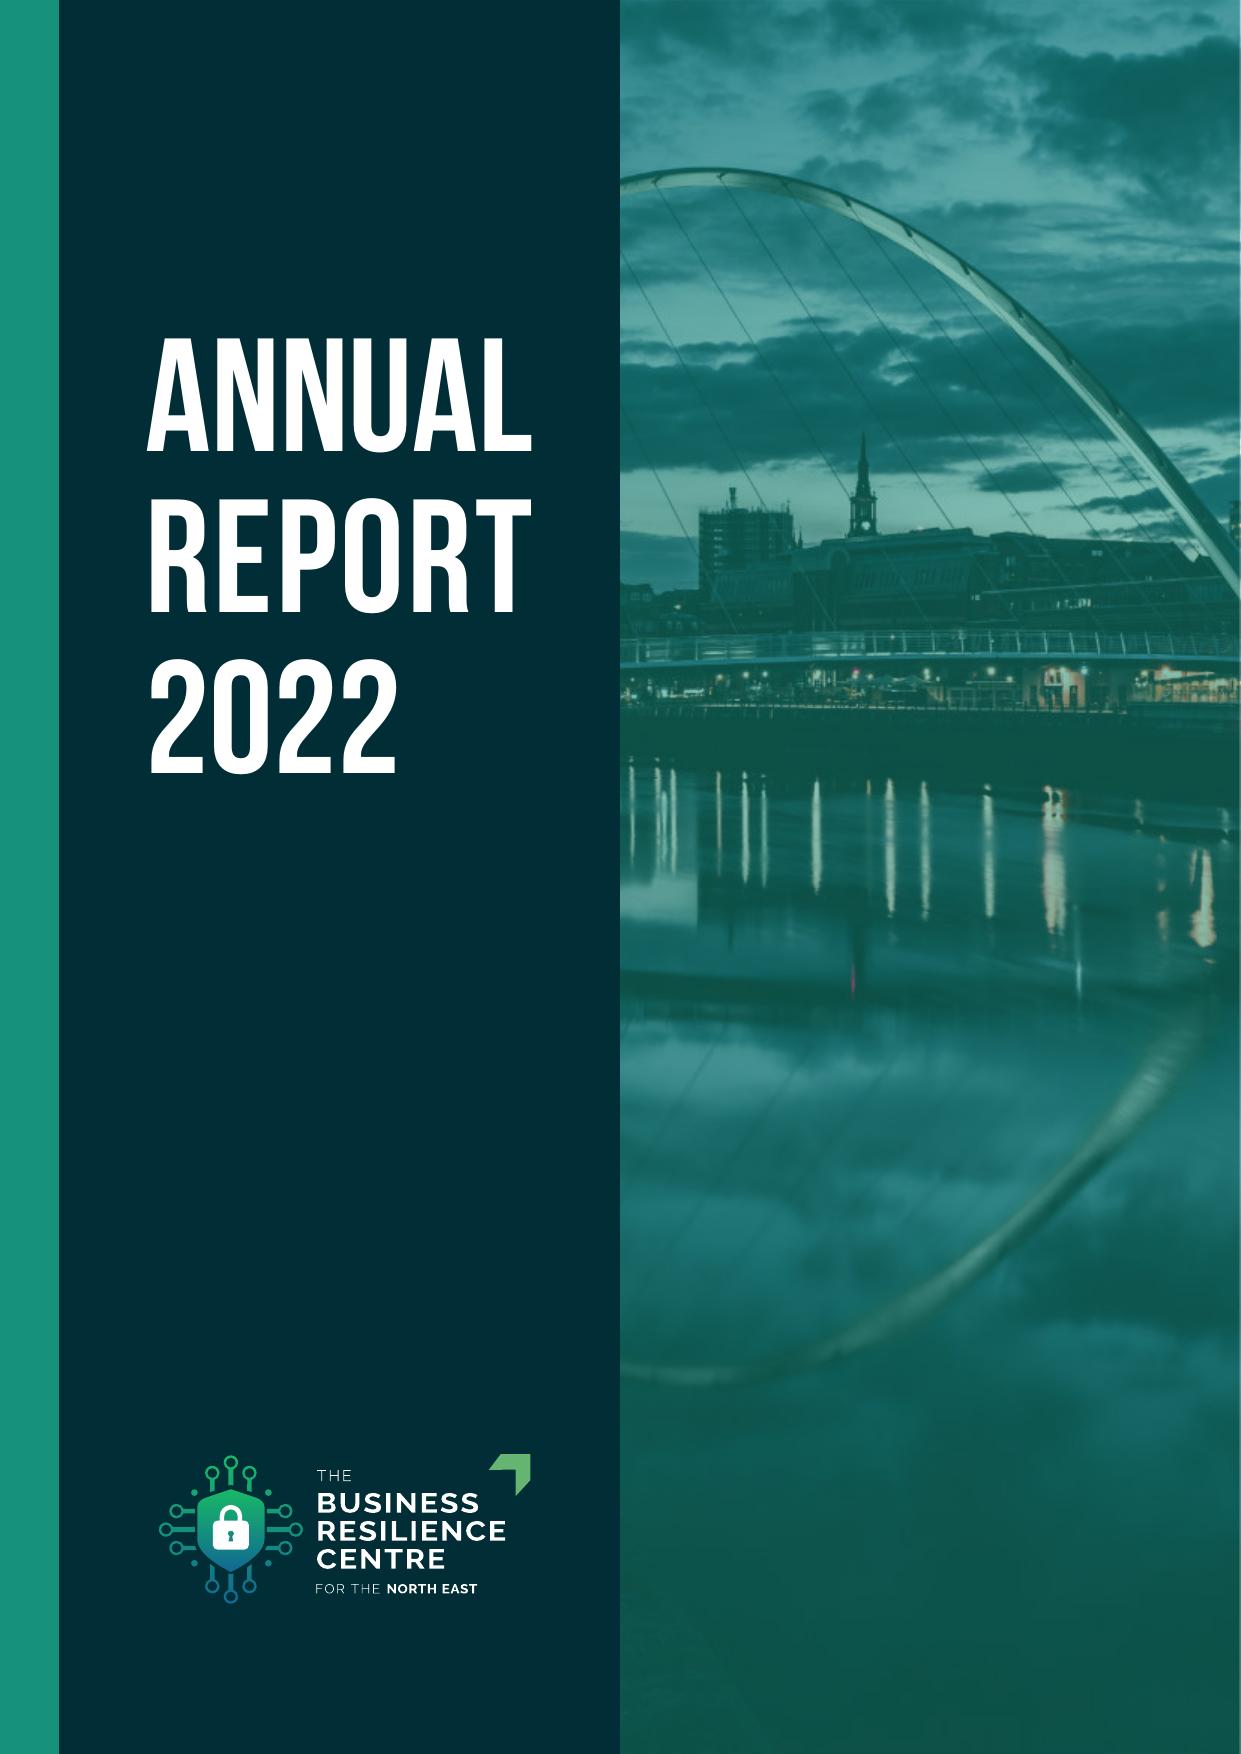 BRIGHTLINEIT 2023 Annual Report